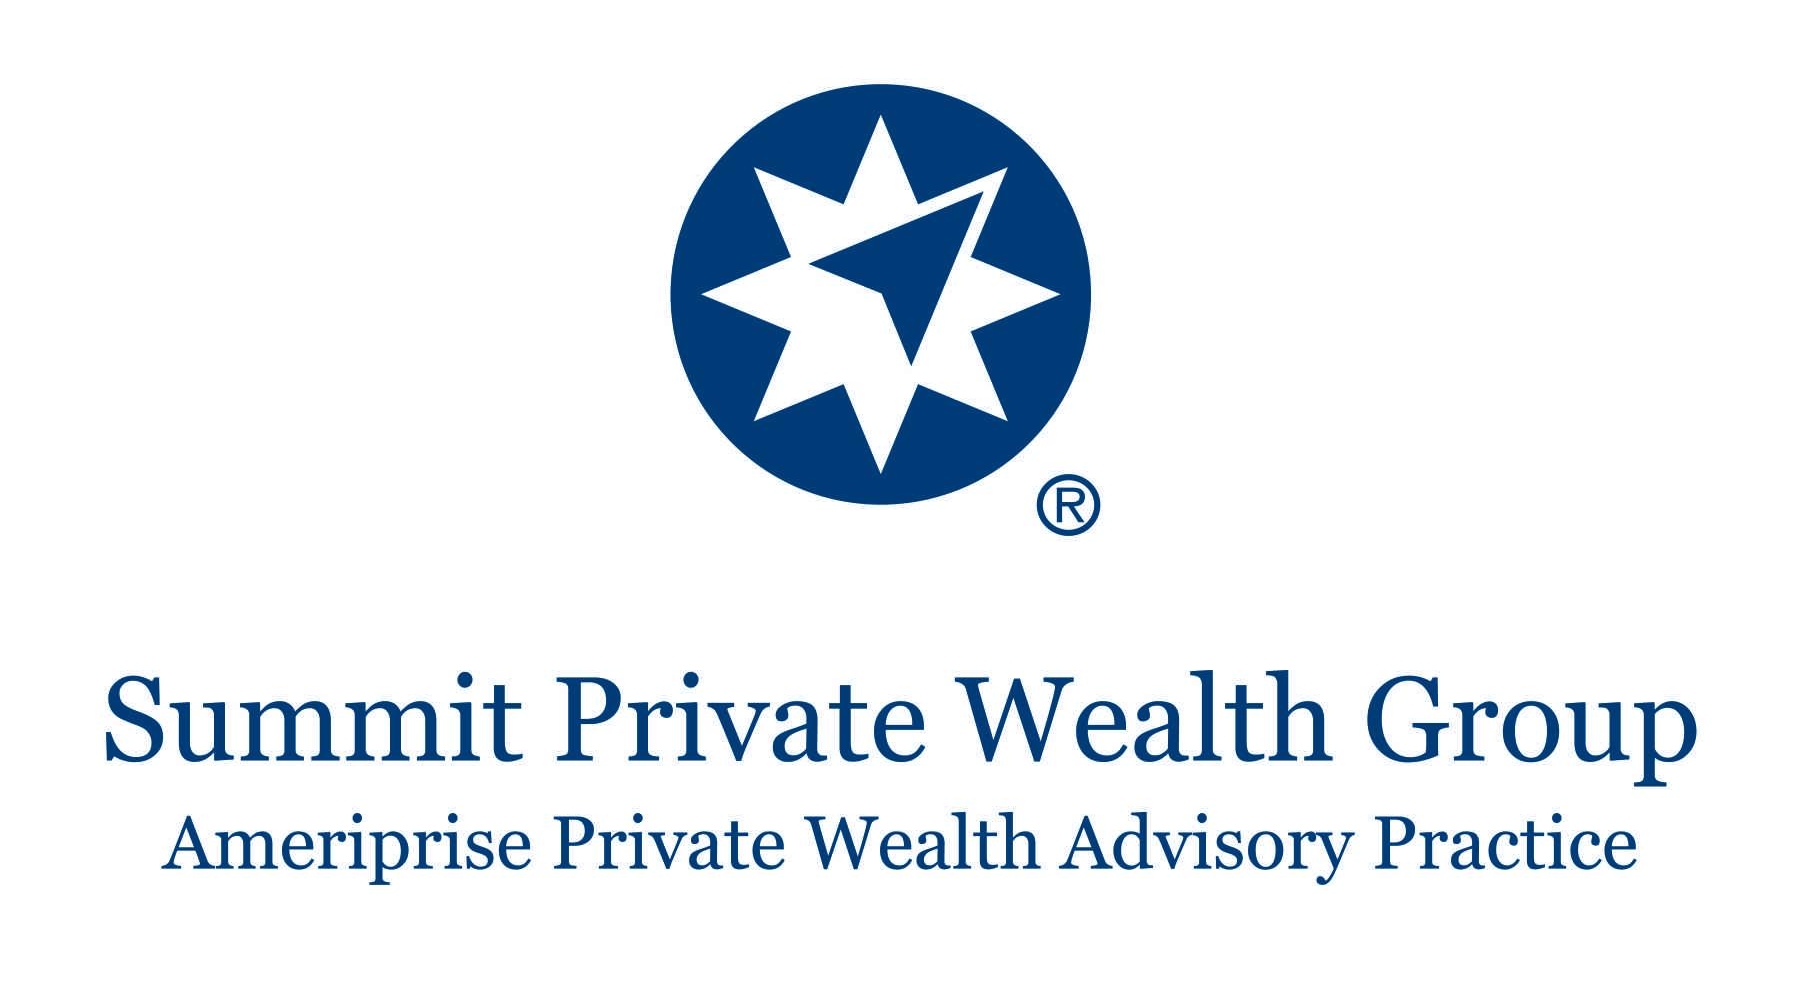 PWA_Summit Private Wealth Group_Med_B.jpeg